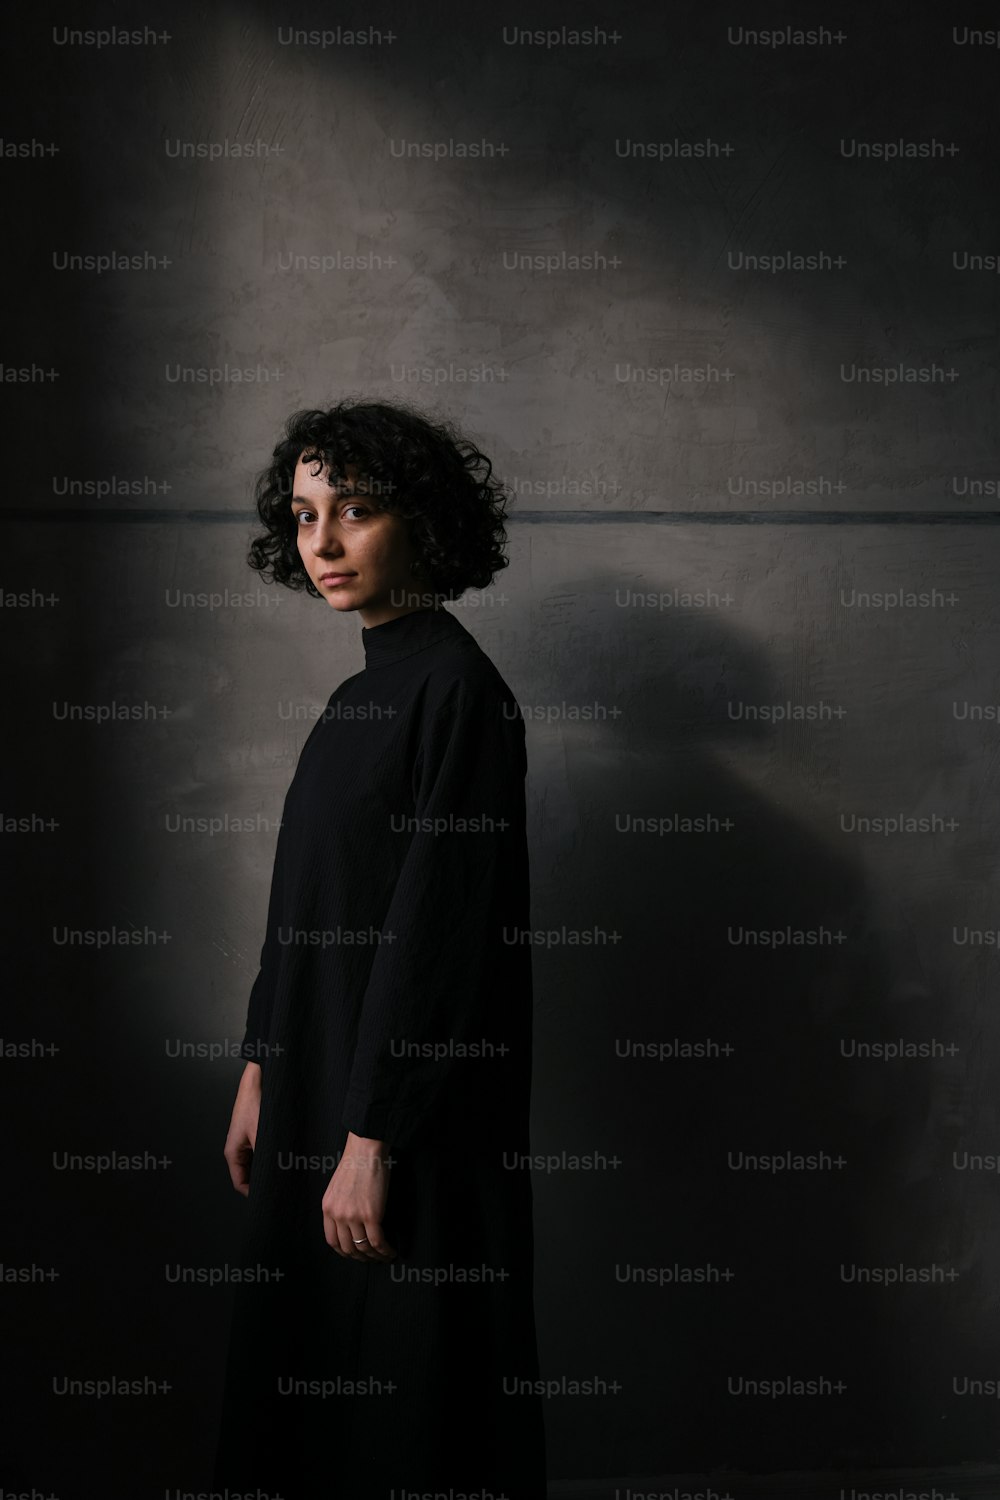 a woman standing in a dark room wearing a black dress